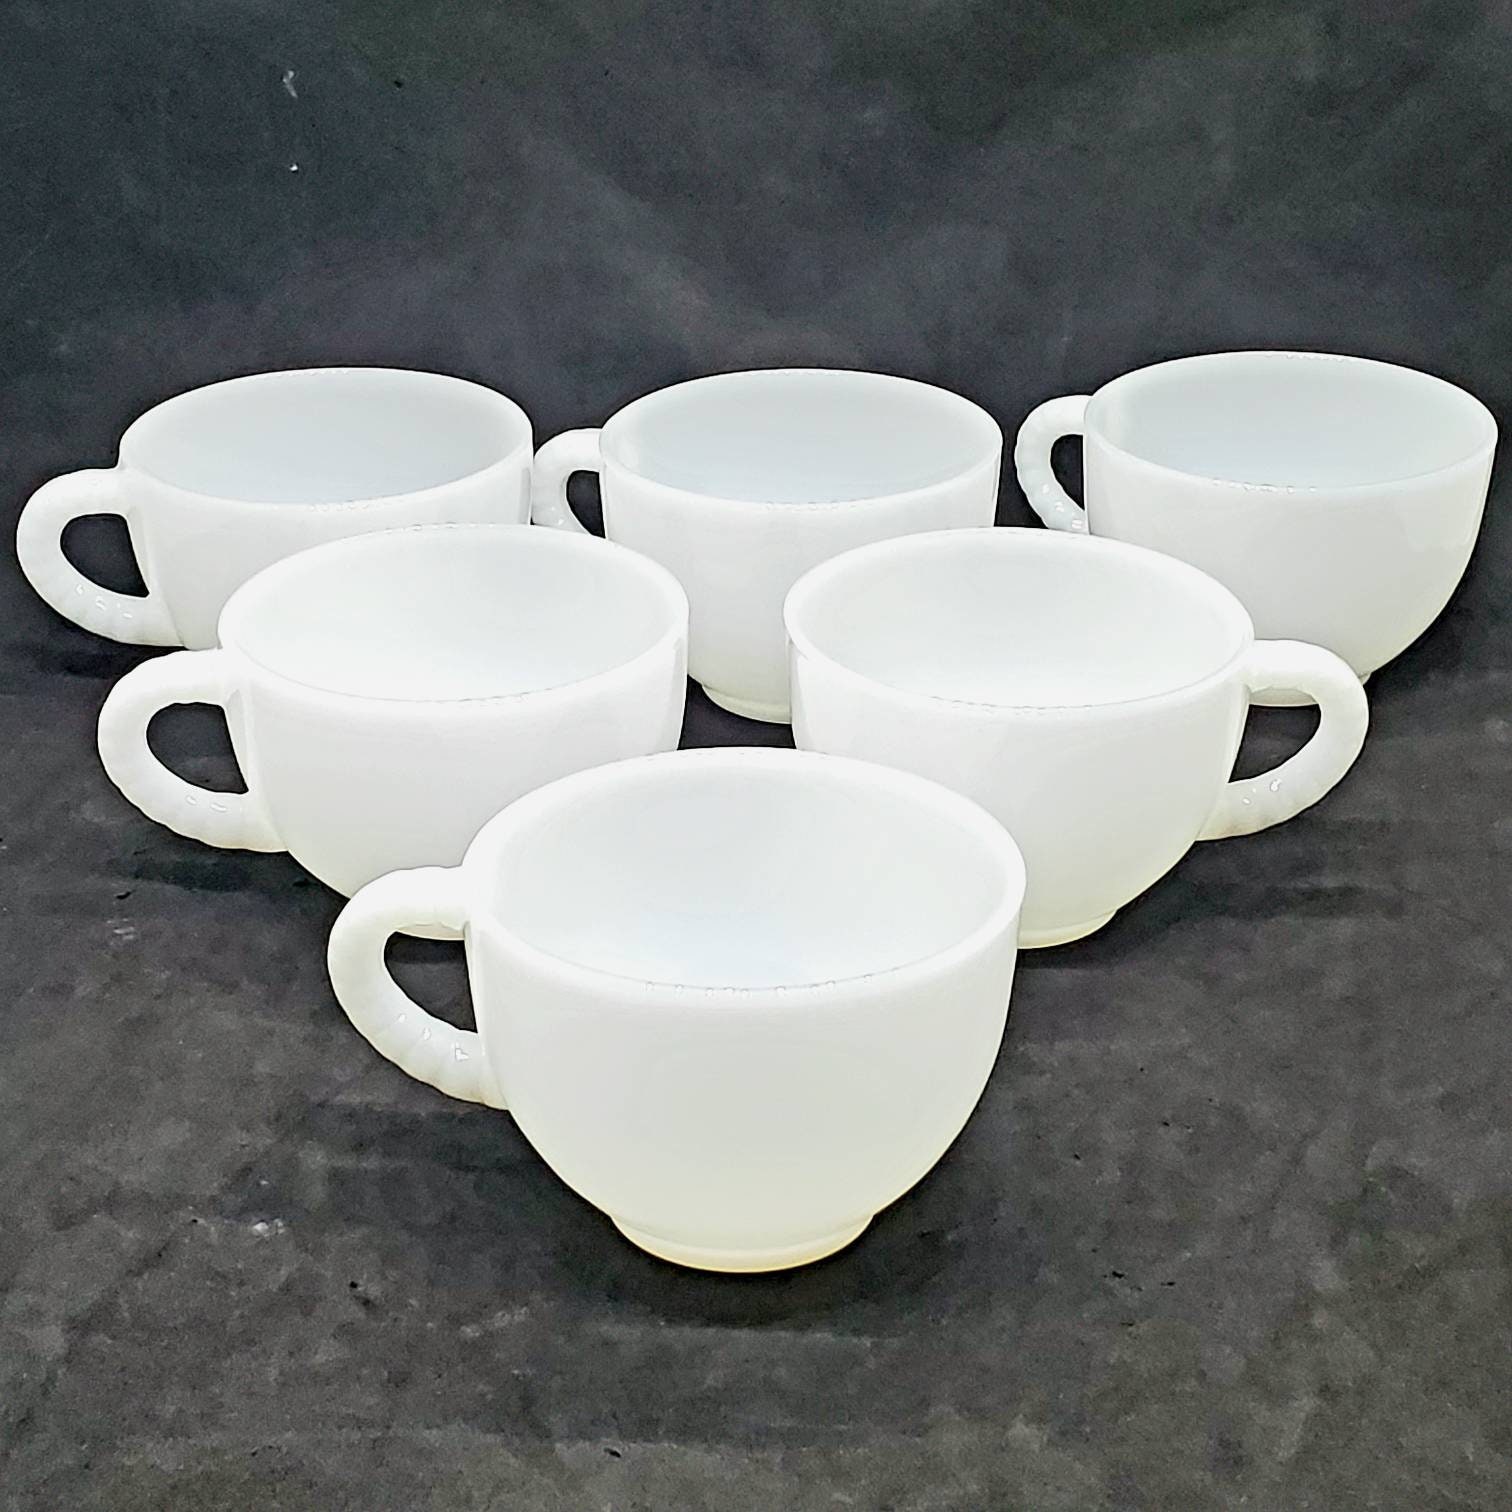 Sweese Porcelain Coffee Mugs Set of 6-12 Ounce for Coffee, Tea